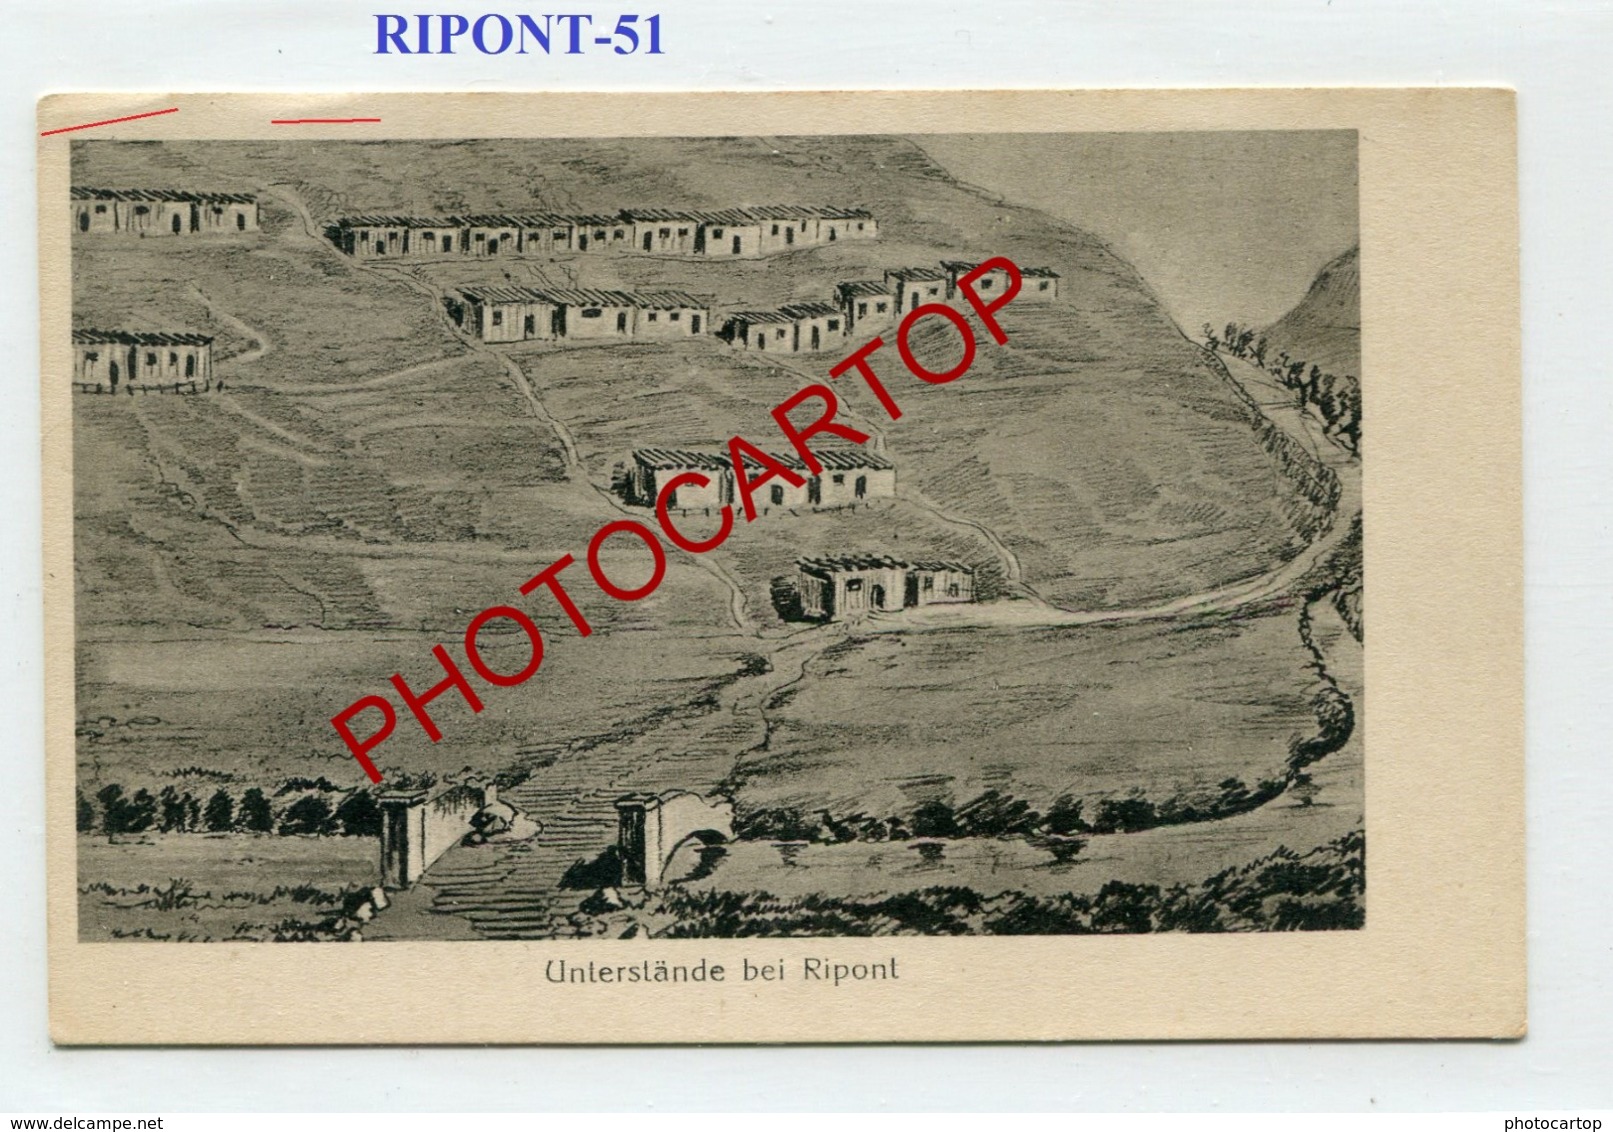 RIPONT-Dessin-Lager-CARTE Imprimee Allemande-Guerre14-18-1WK-France-51-Militaria- - Ville-sur-Tourbe